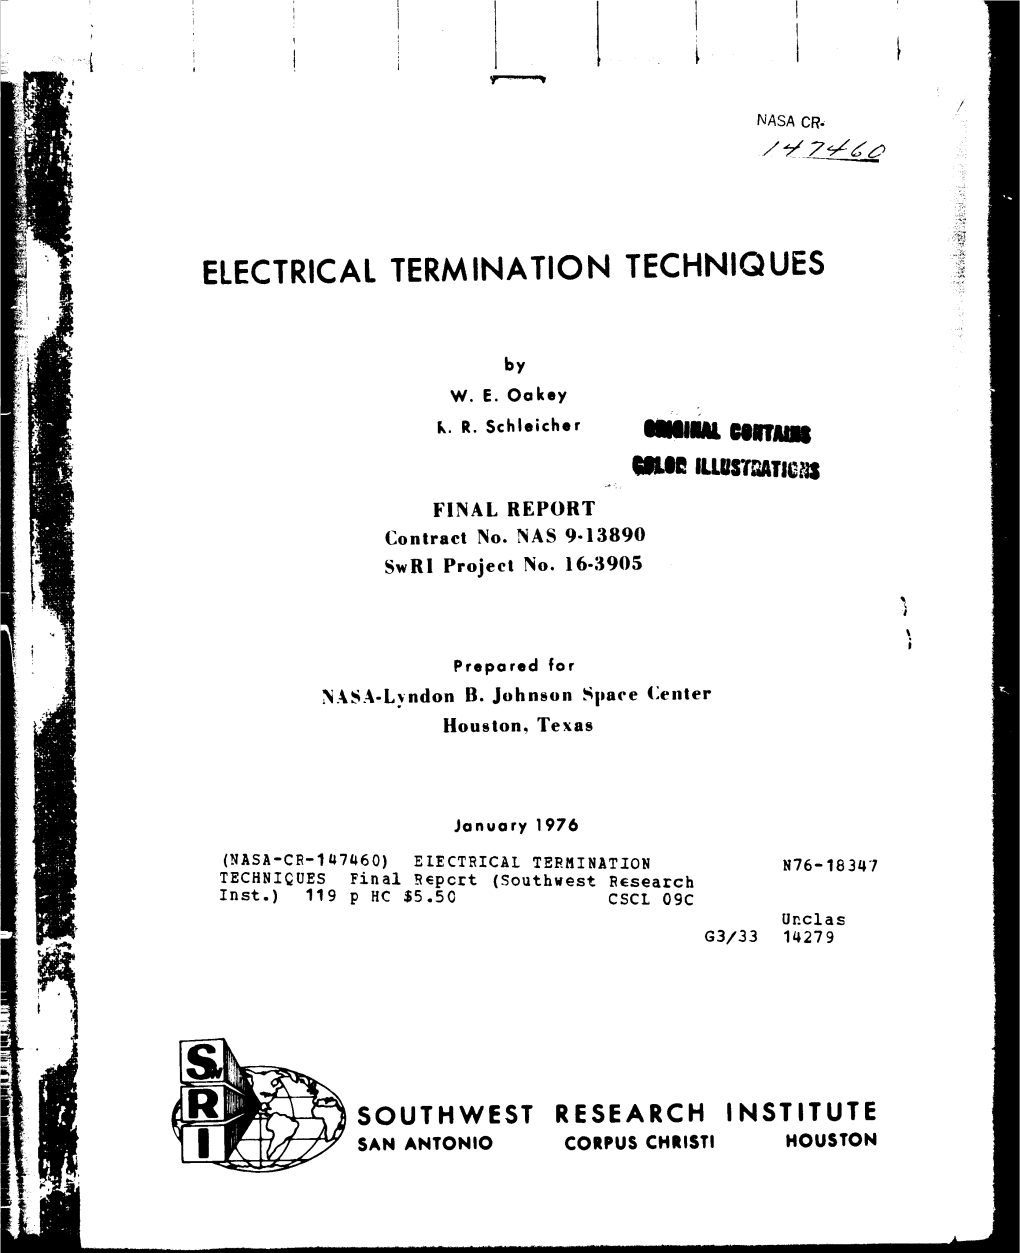 Electrical Termination Techniques